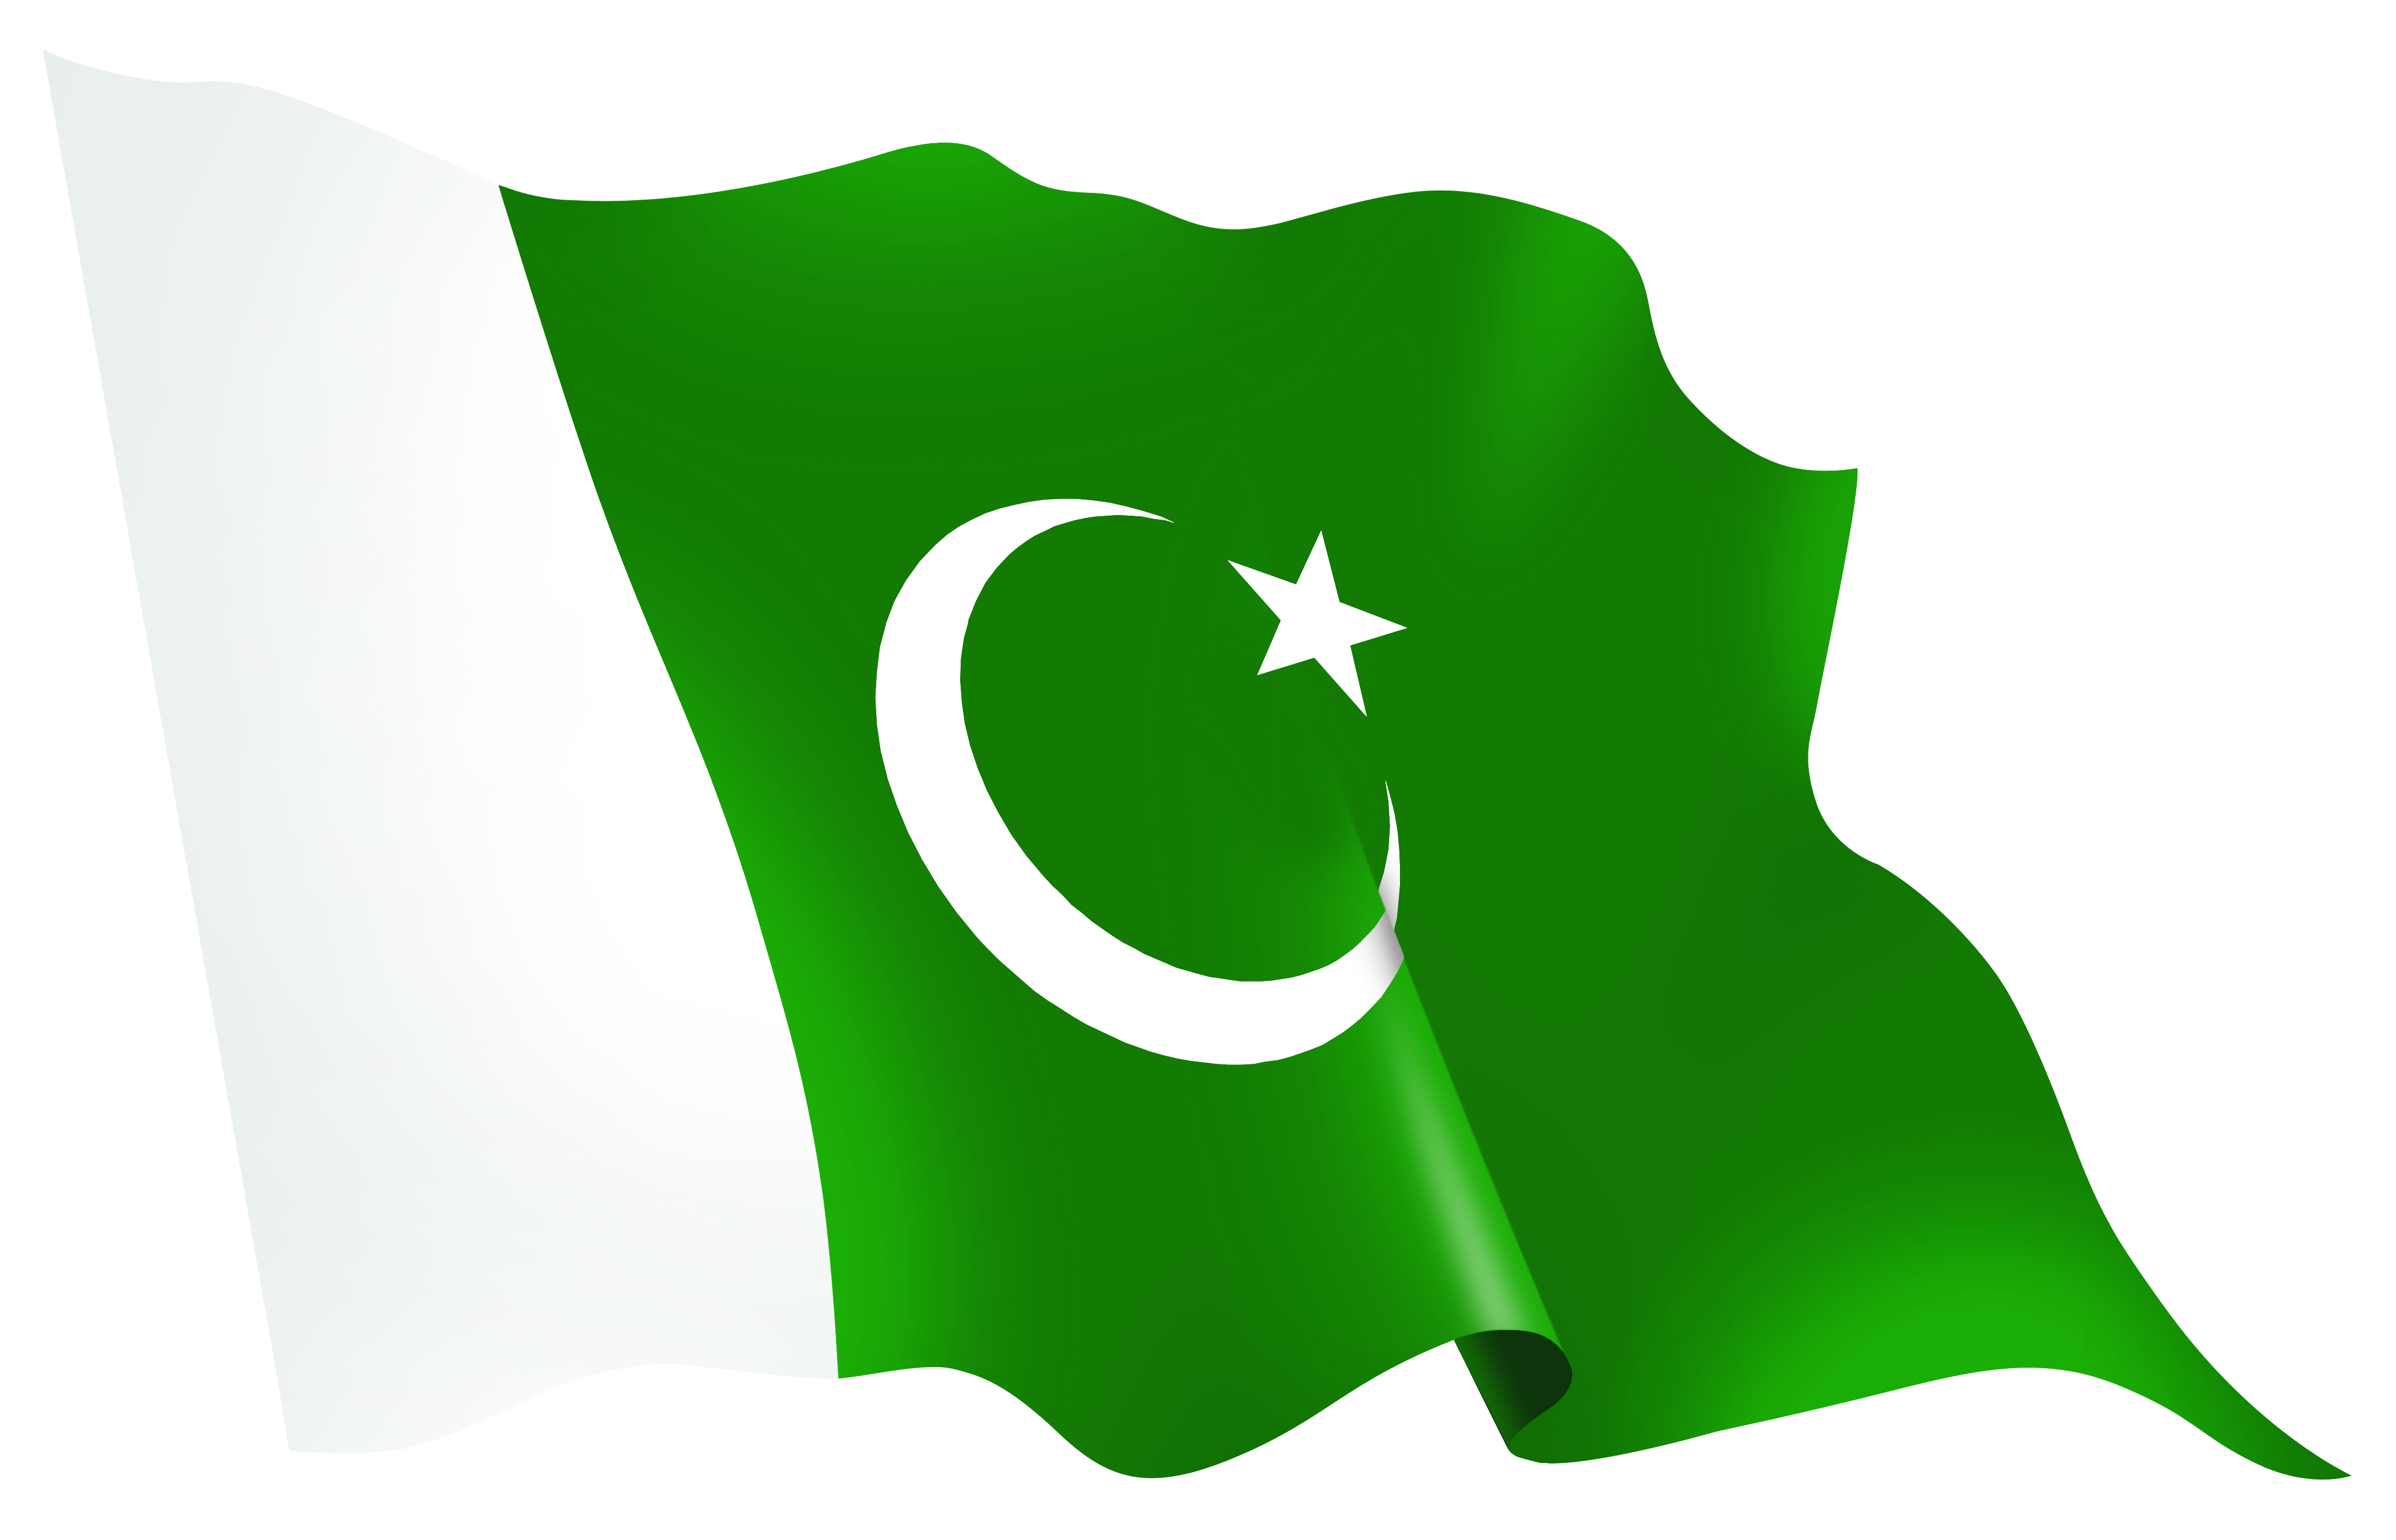 Download U2013 Pakistan Flag Hd Image Hdpng.com  - Pak Flag, Transparent background PNG HD thumbnail